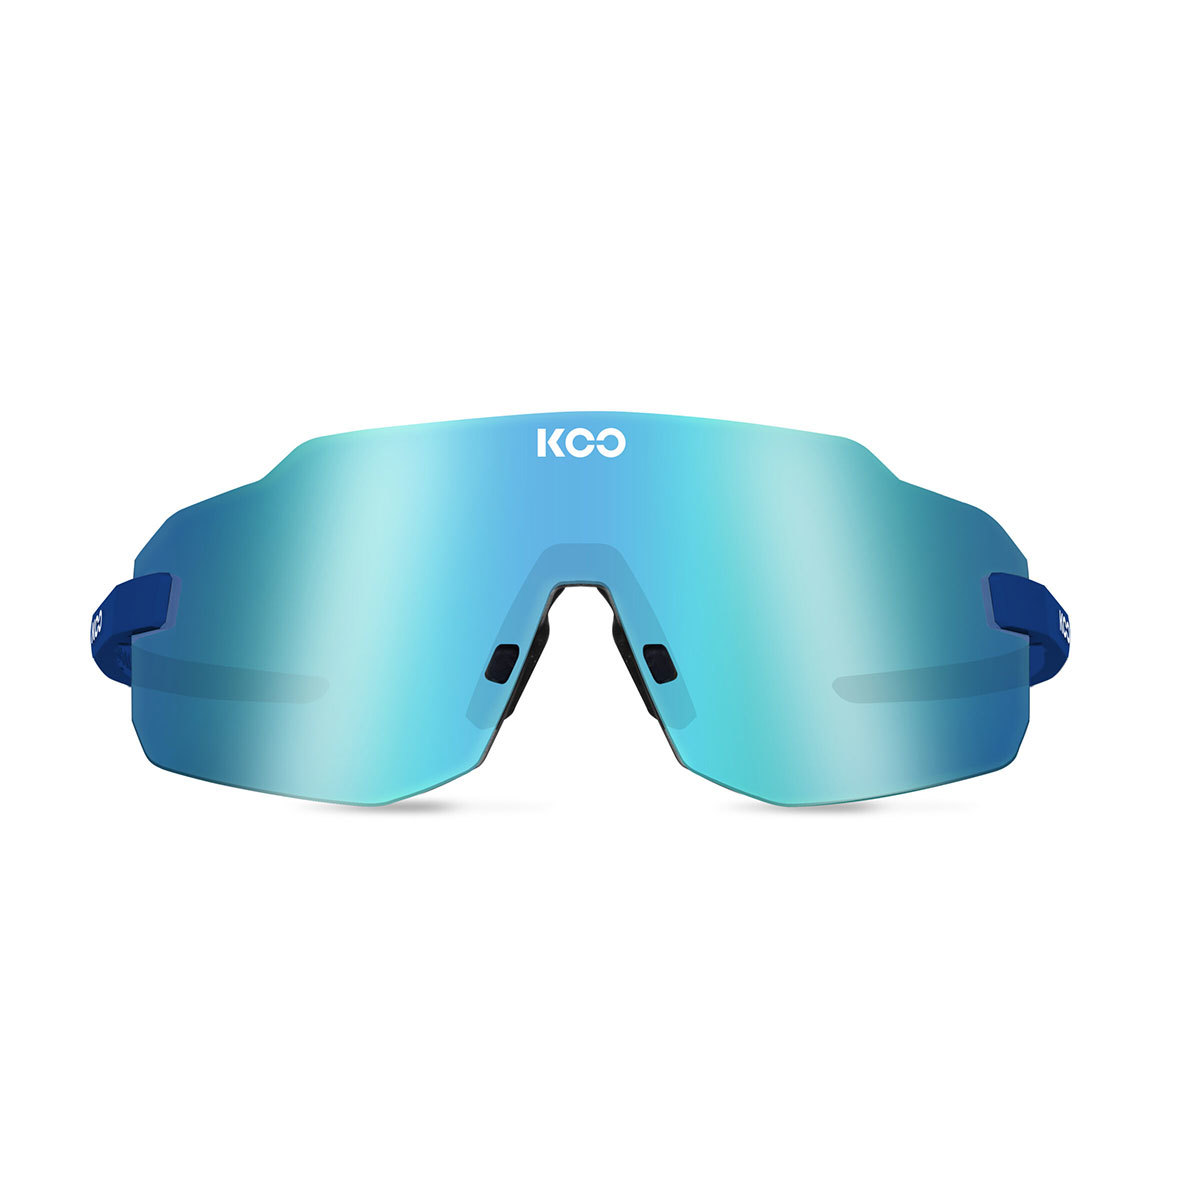 KOO SUPERNOVA Sport Zonnebril Donkerblauw met Turquoise Mirror Lens